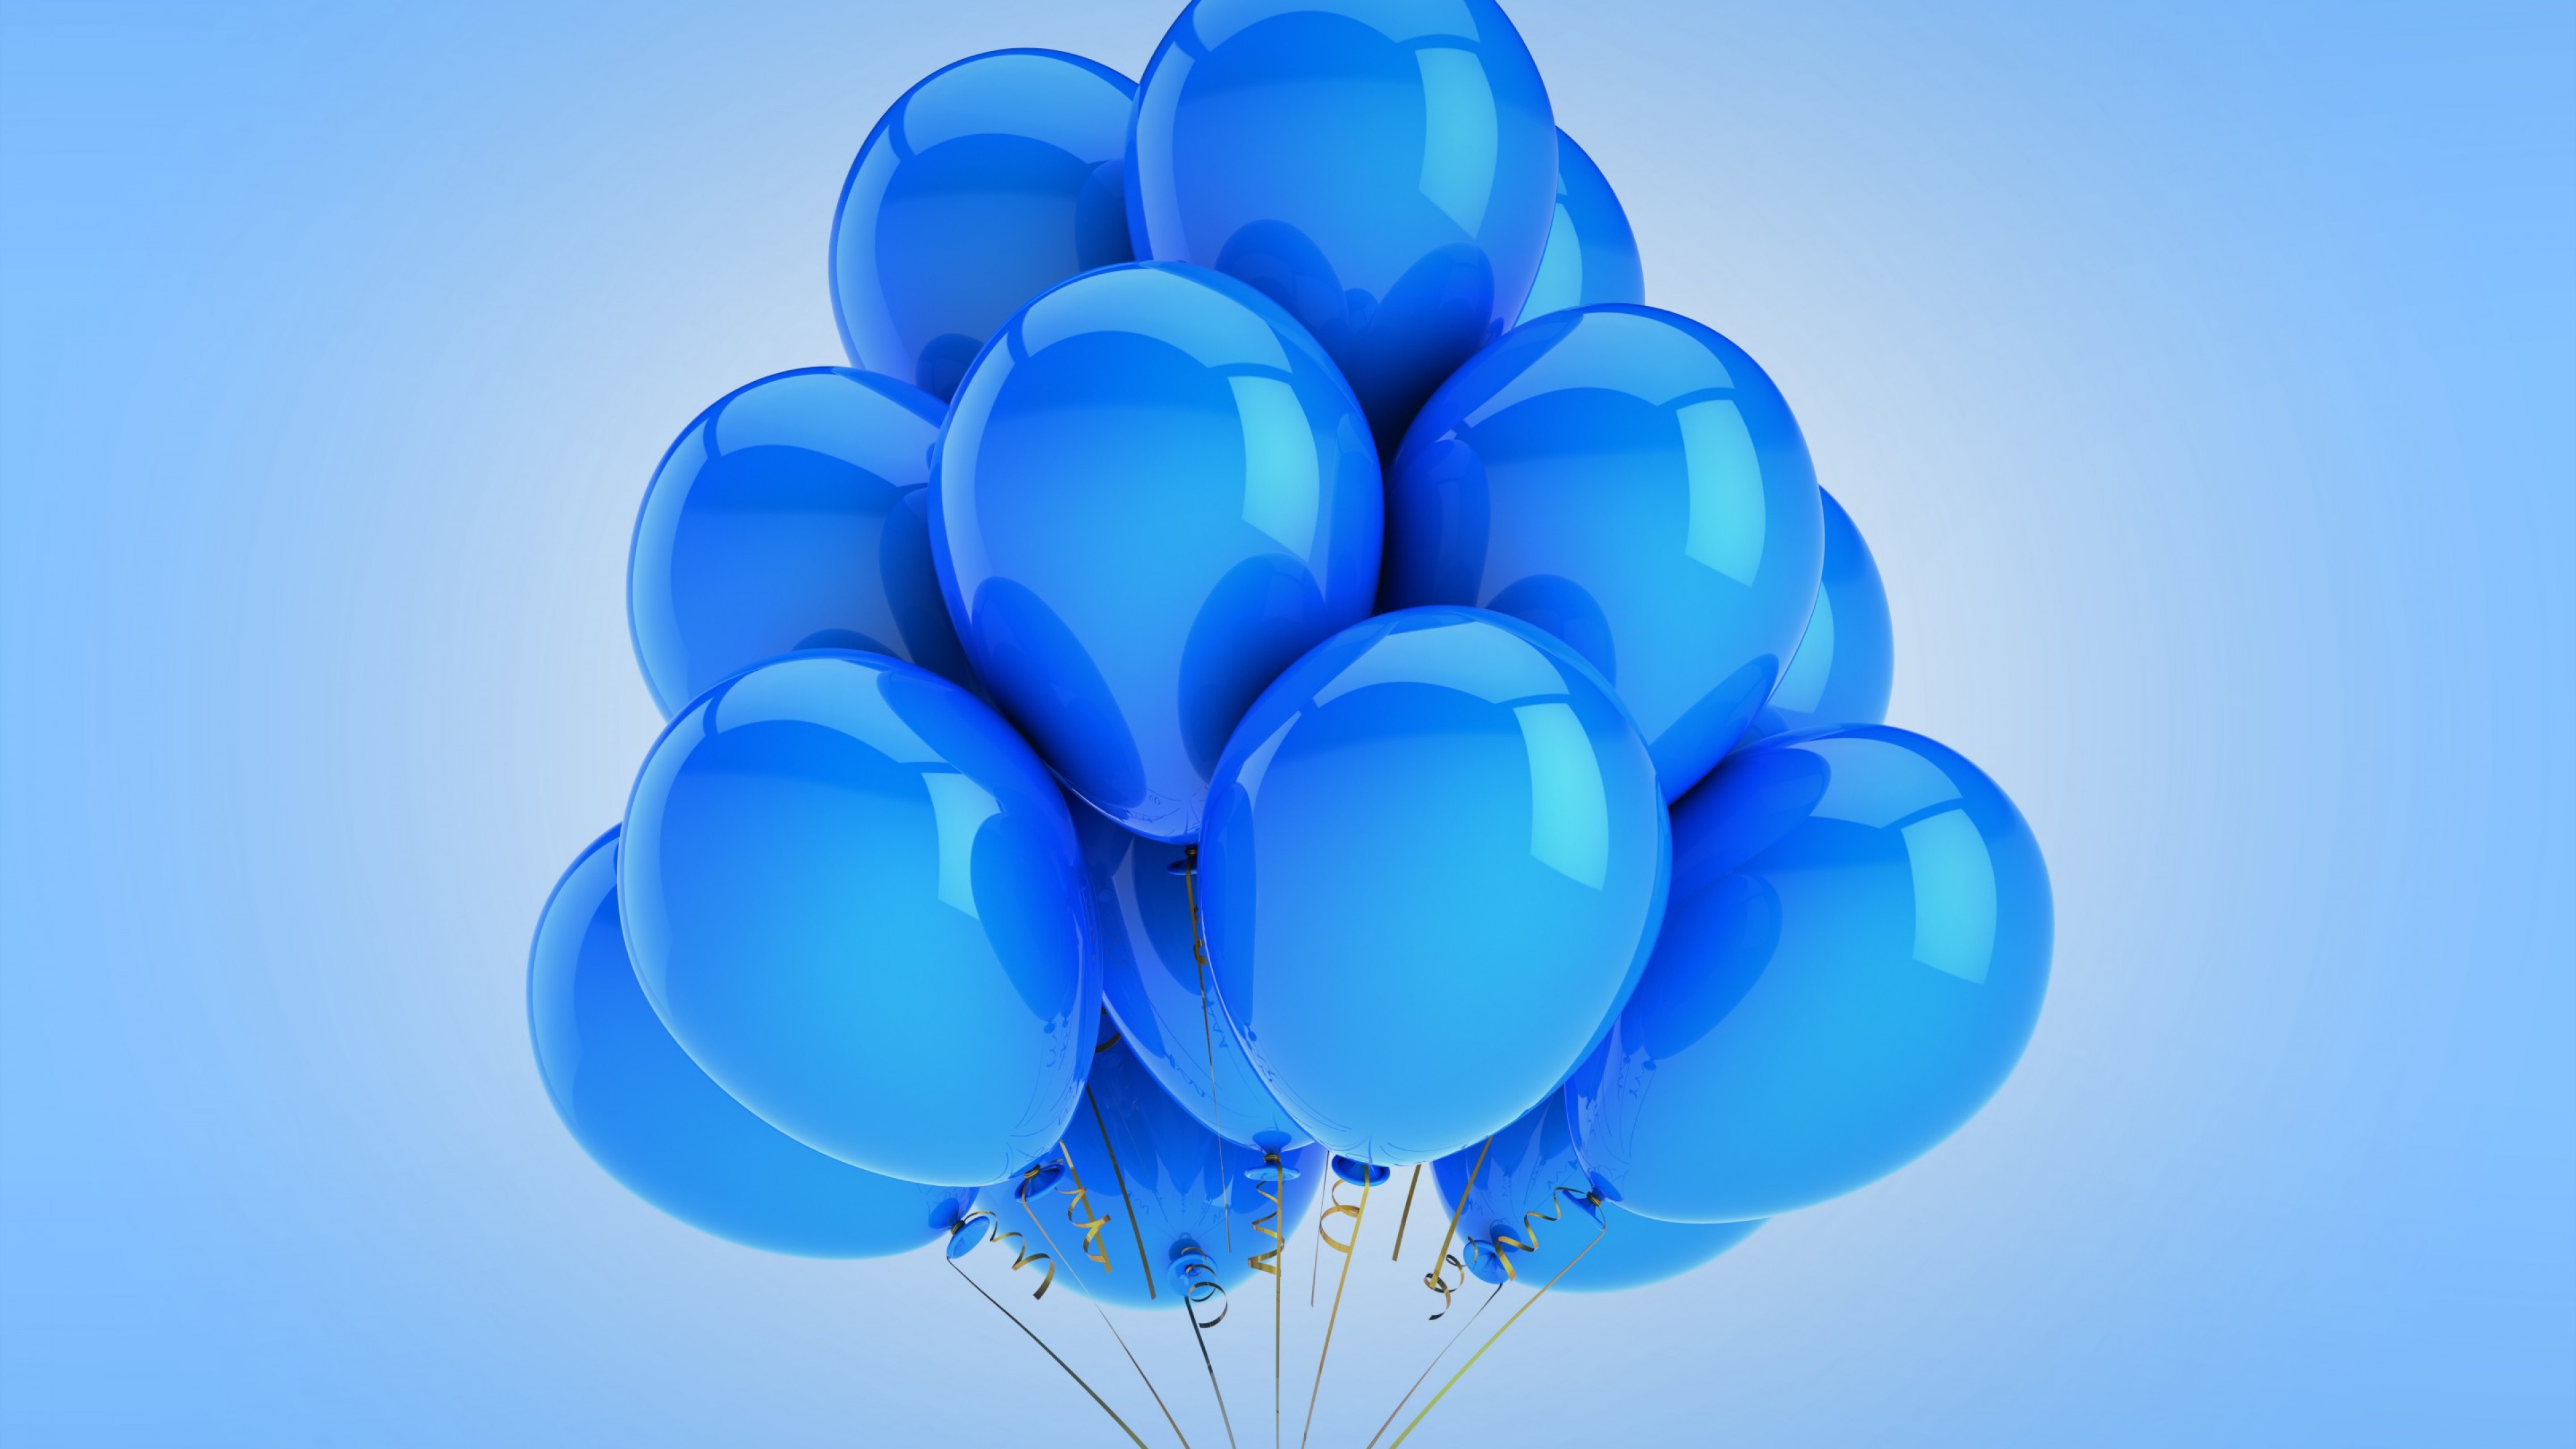 General 3840x2160 balloon blue cyan minimalism cyan background simple background